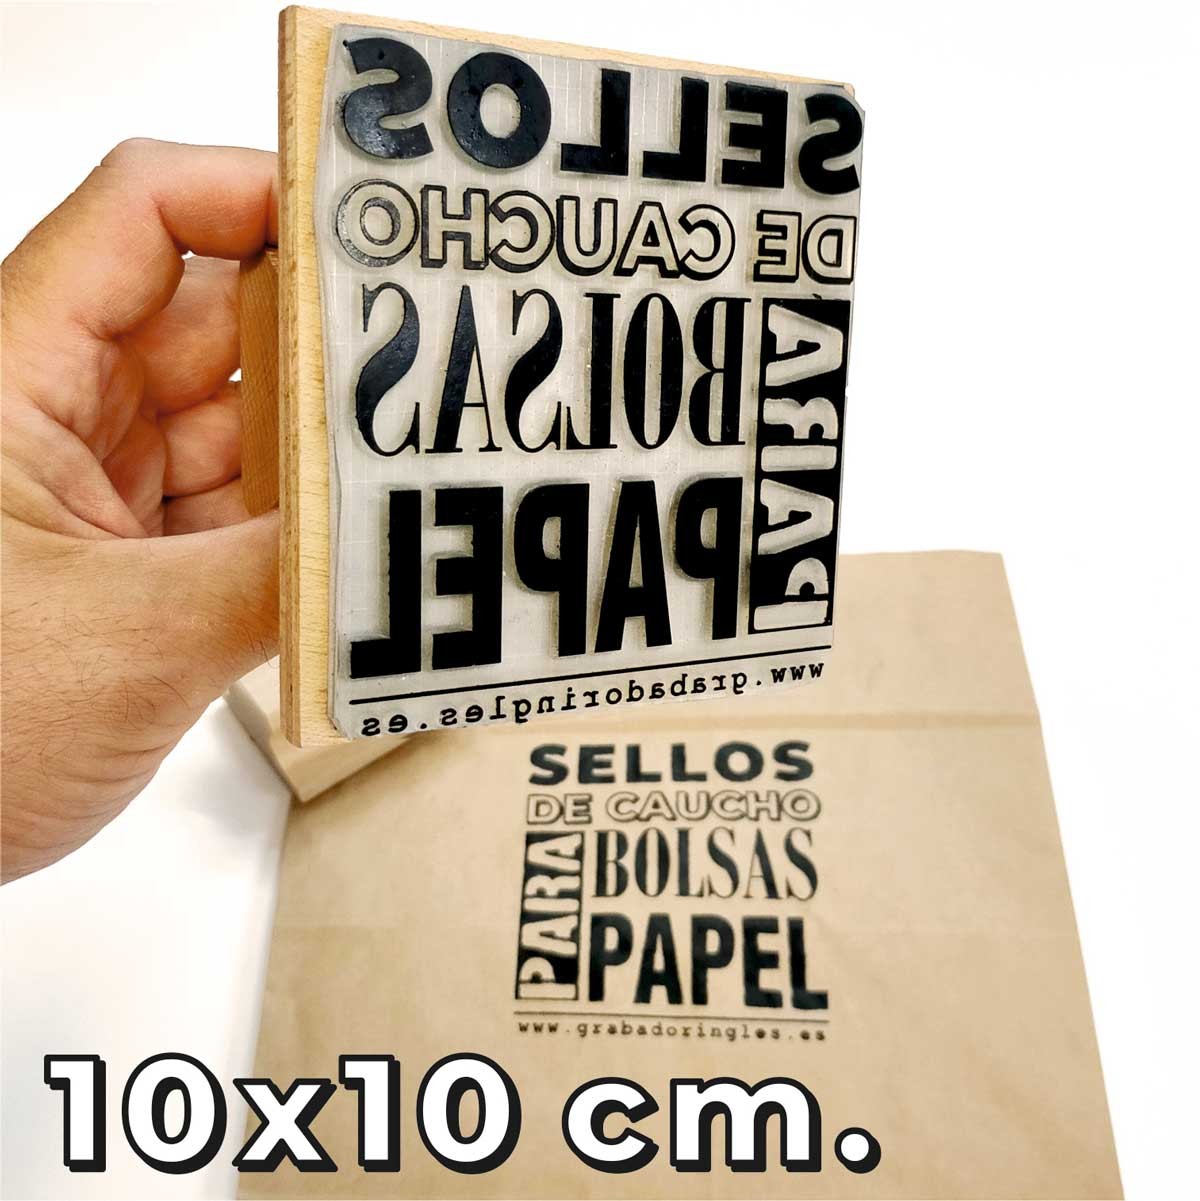 capoc De Dios Clancy Sello de caucho para bolsas de papel kraft 10x10 cm - GRABADOR INGLES Sello  de goma manual